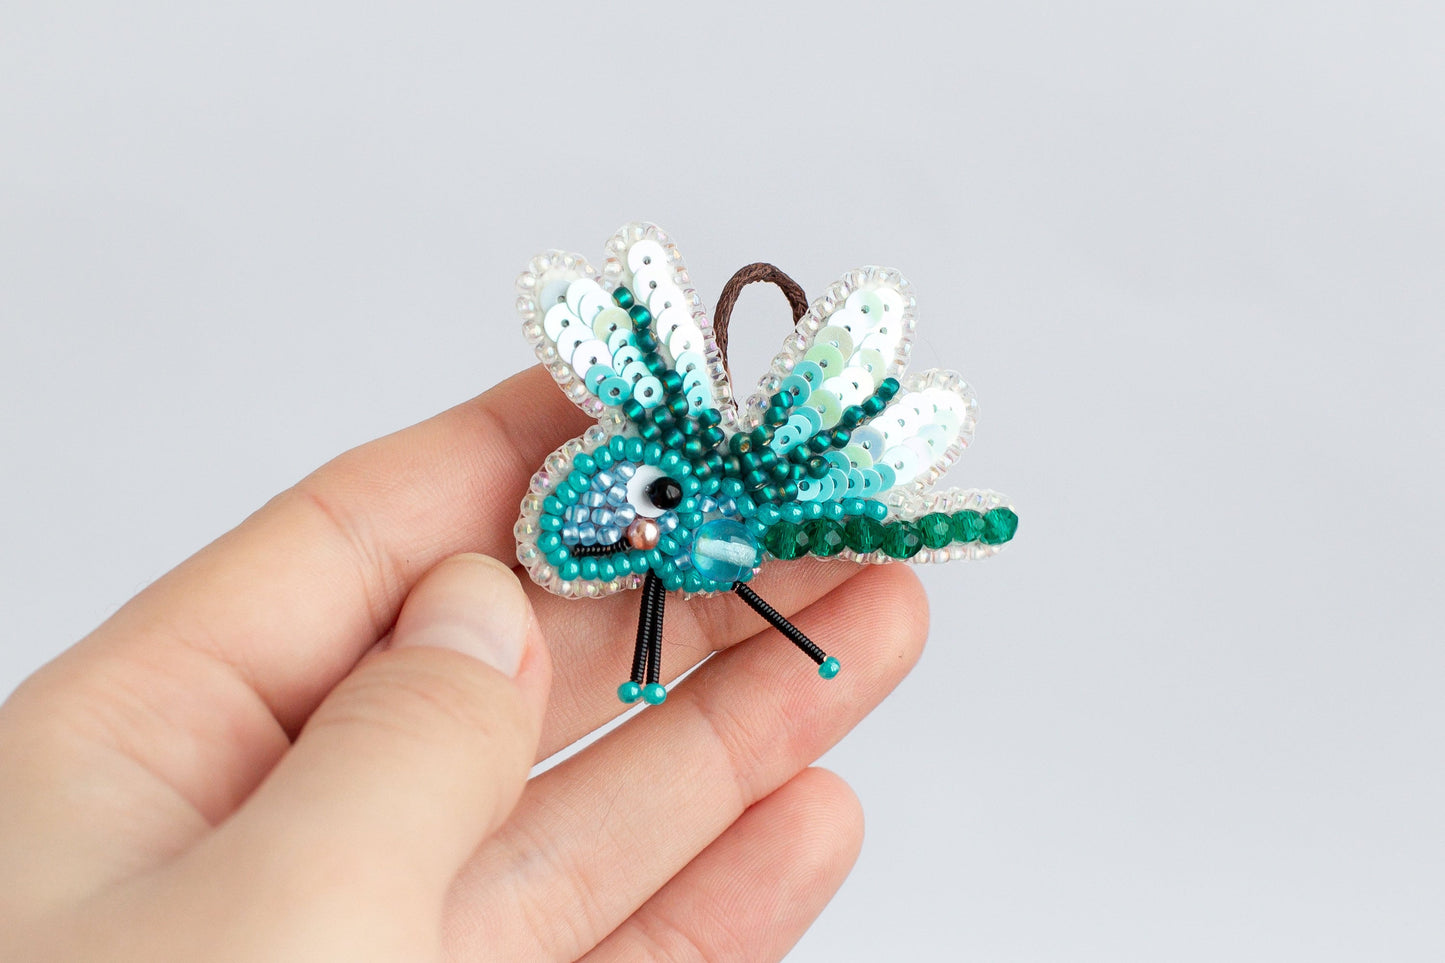 Blue Dragonfly Bead embroidery kit. Seed Bead Brooch kit. DIY Craft kit. Beadweaving Kit. Needlework beading. Handmade Jewelry Making Kit